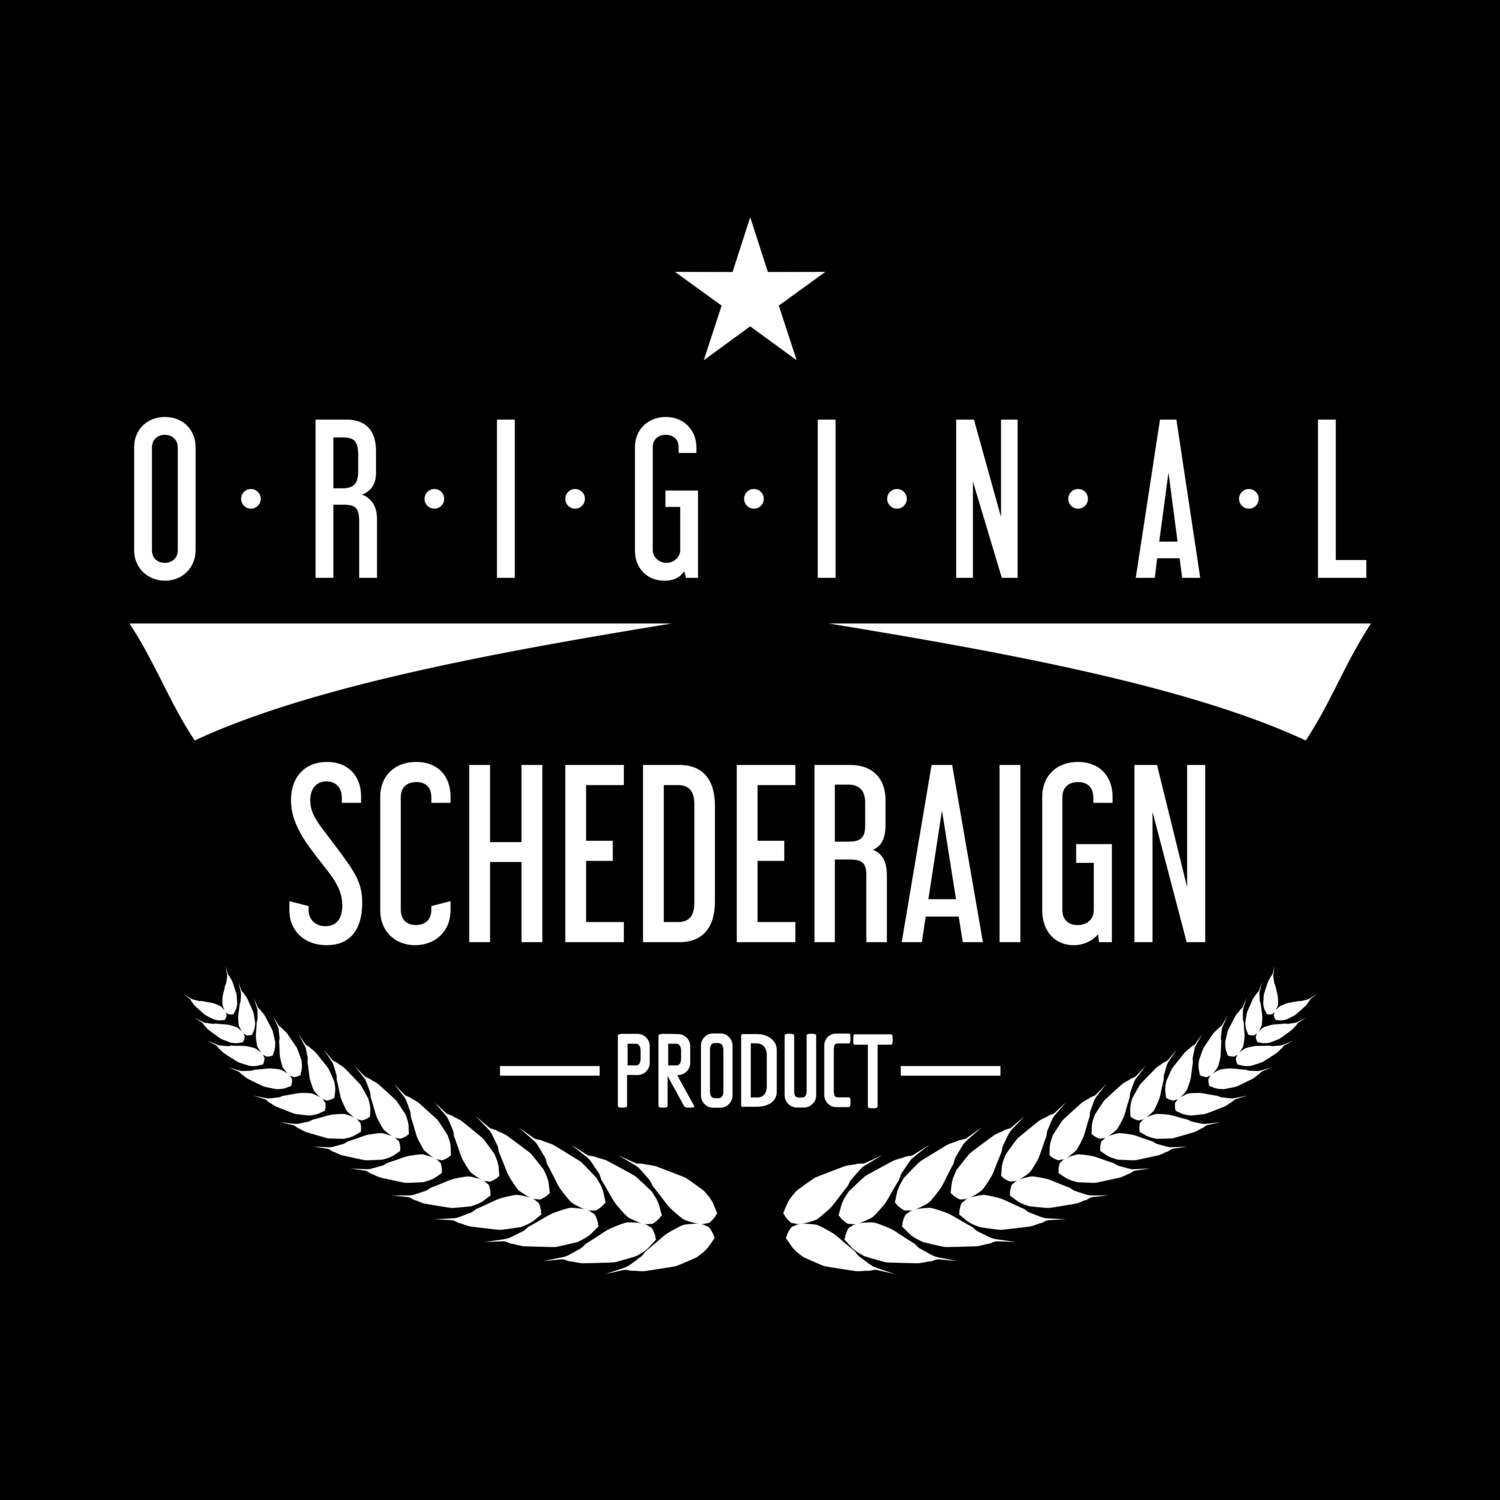 Schederaign T-Shirt »Original Product«